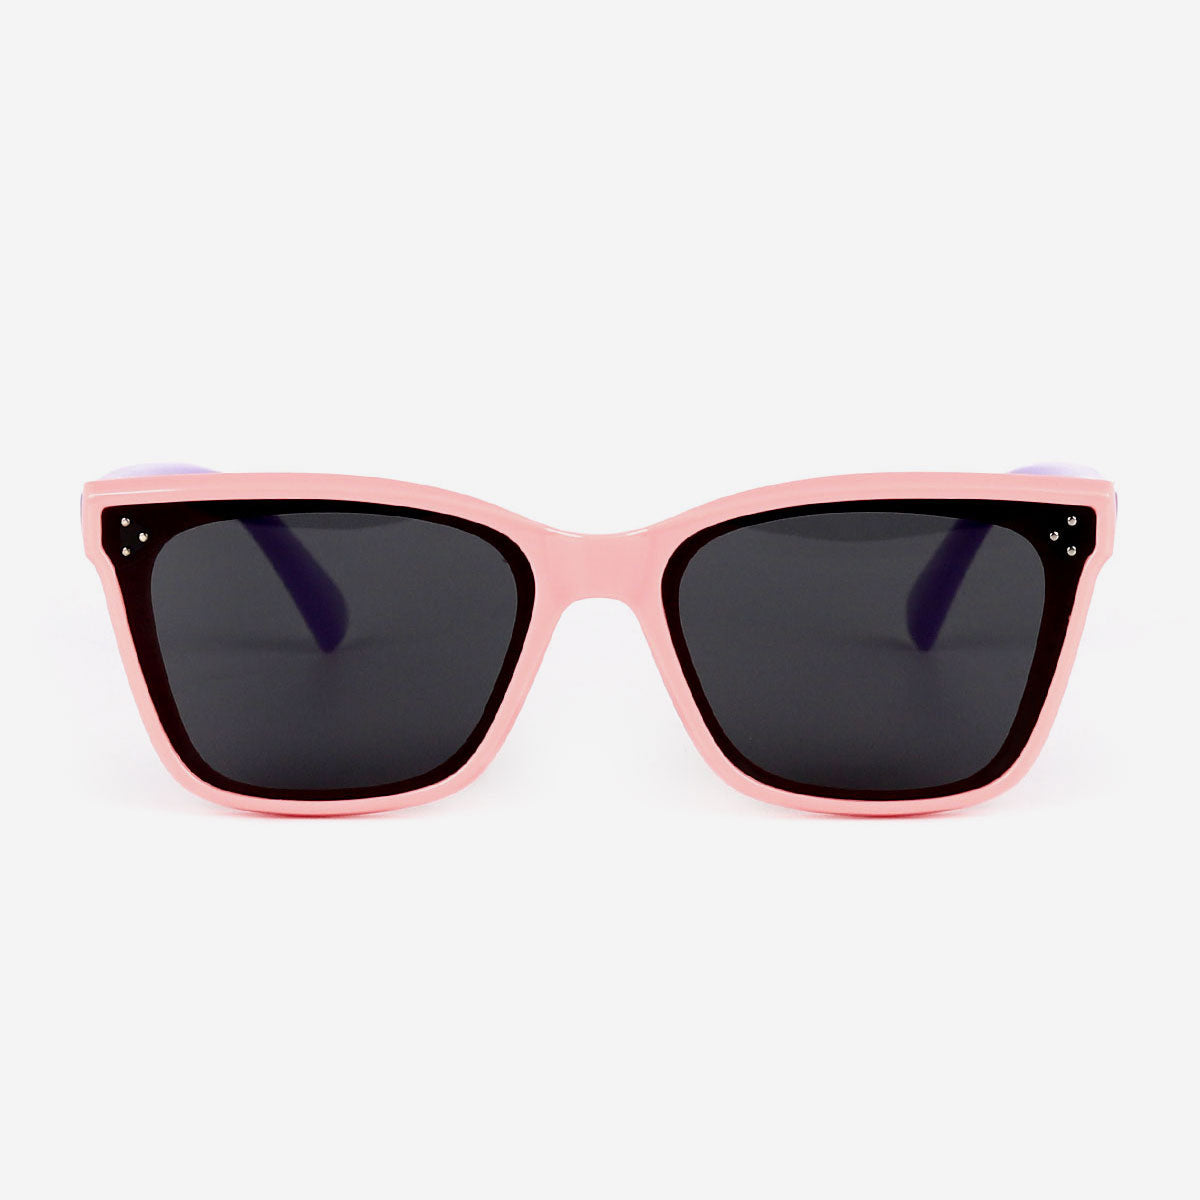 Avery - Polarized Navigator Sunglasses - Unbreakable UV Protection